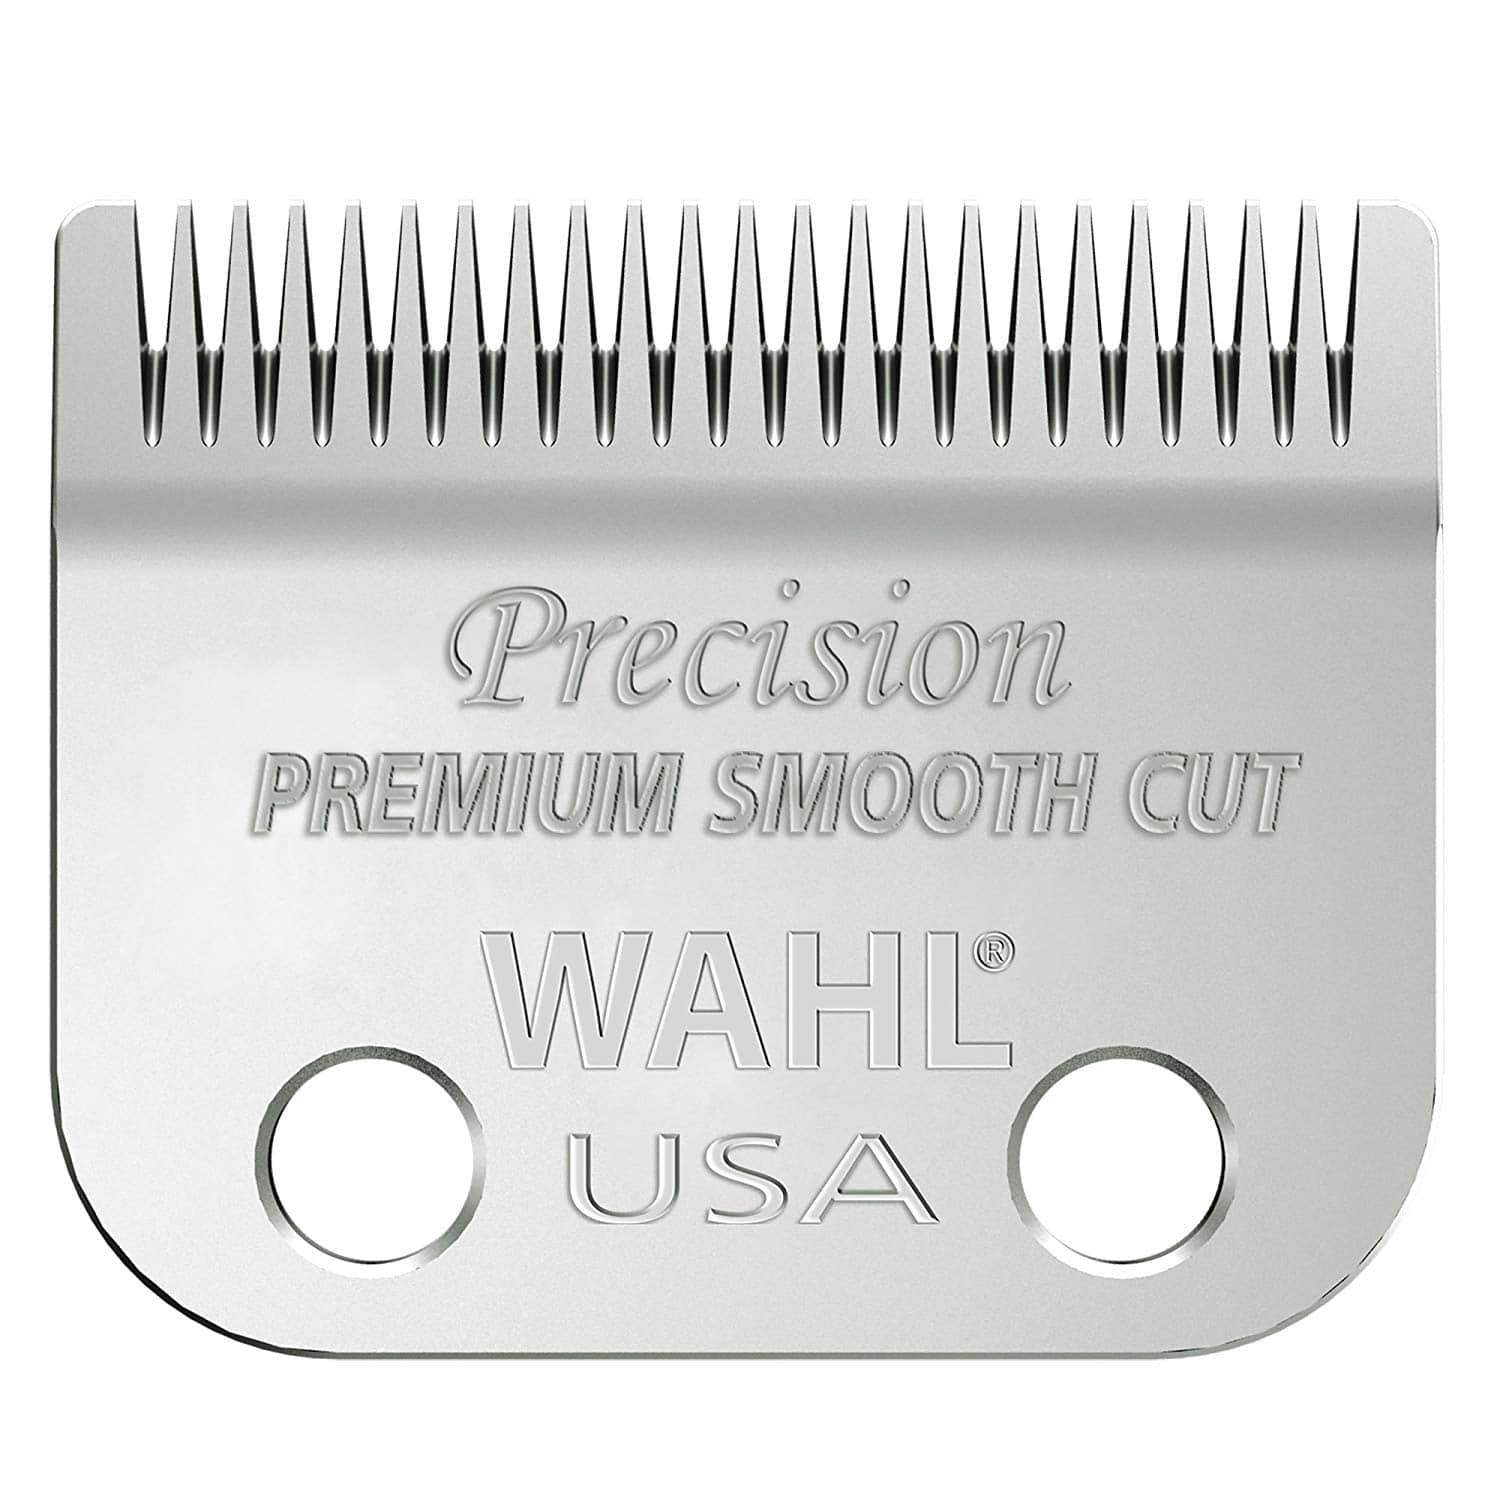 Wahl Clipper Elite Pro High-Performance Haircut Kit for men